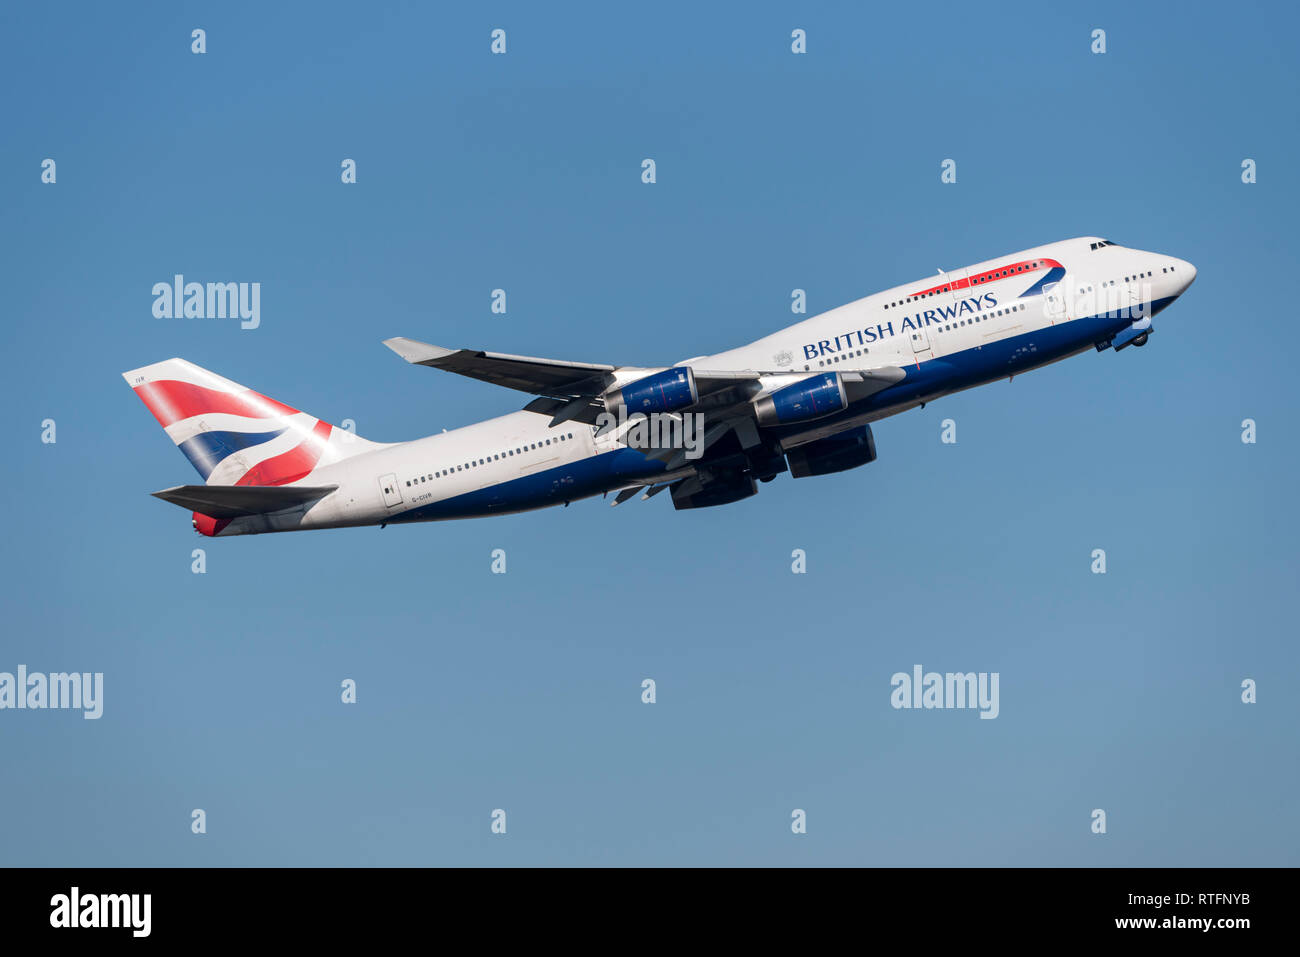 British Airways Boeing 747 Jumbo jet airliner plane G-CIVR taking off from London Heathrow Airport, UK, in blue sky. Flight departure Stock Photo